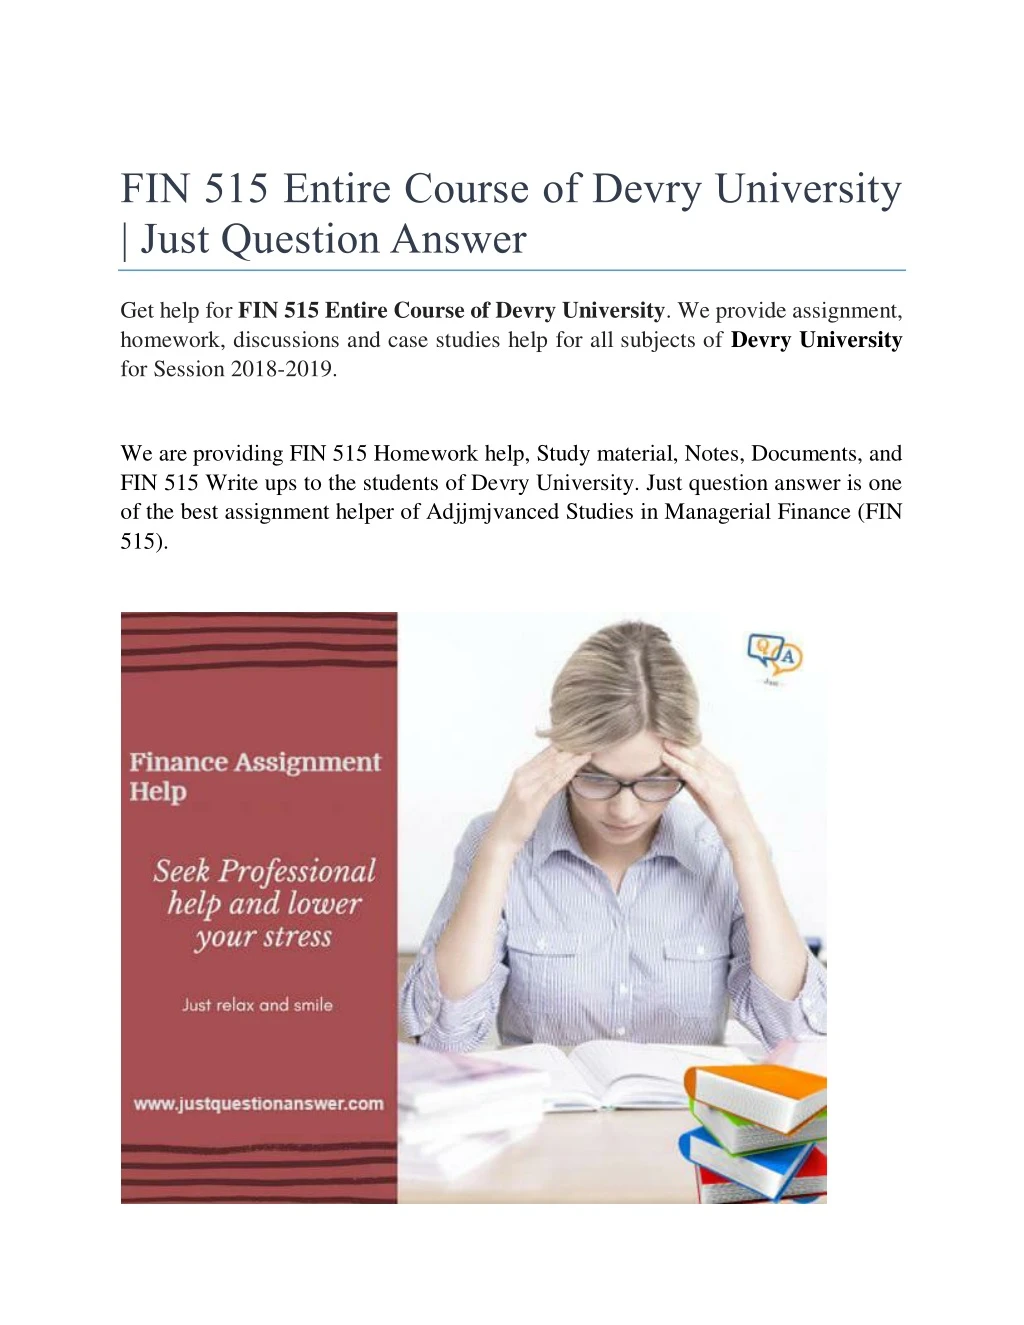 fin 515 entire course of devry university just